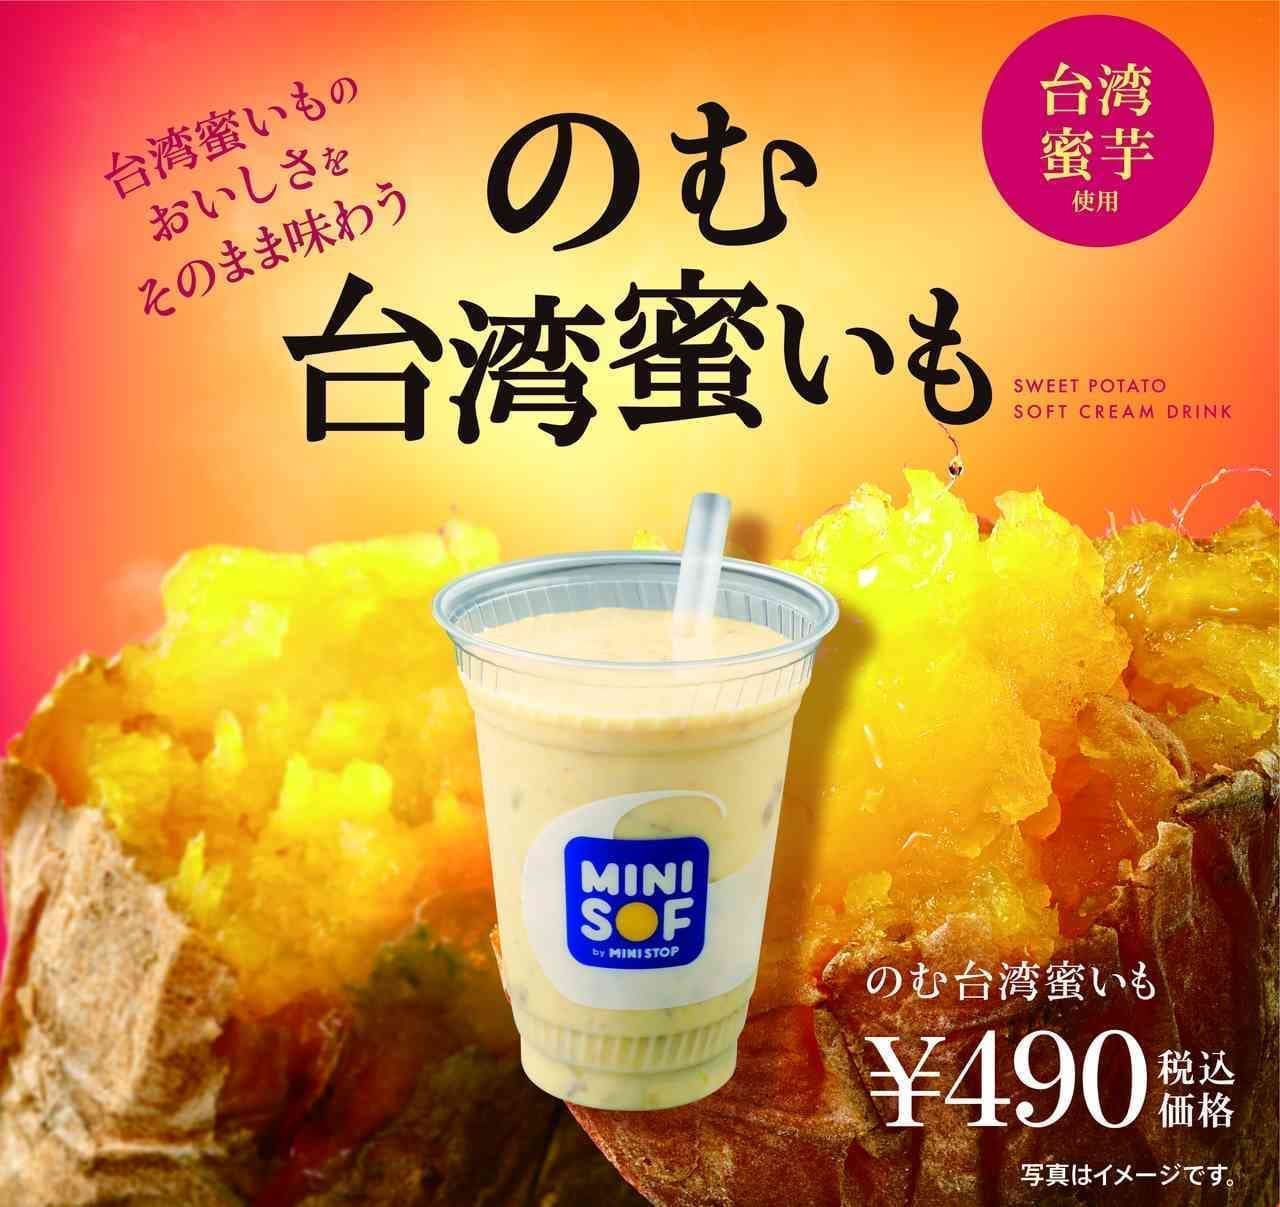 Mini soft drink Taiwanese honey potato